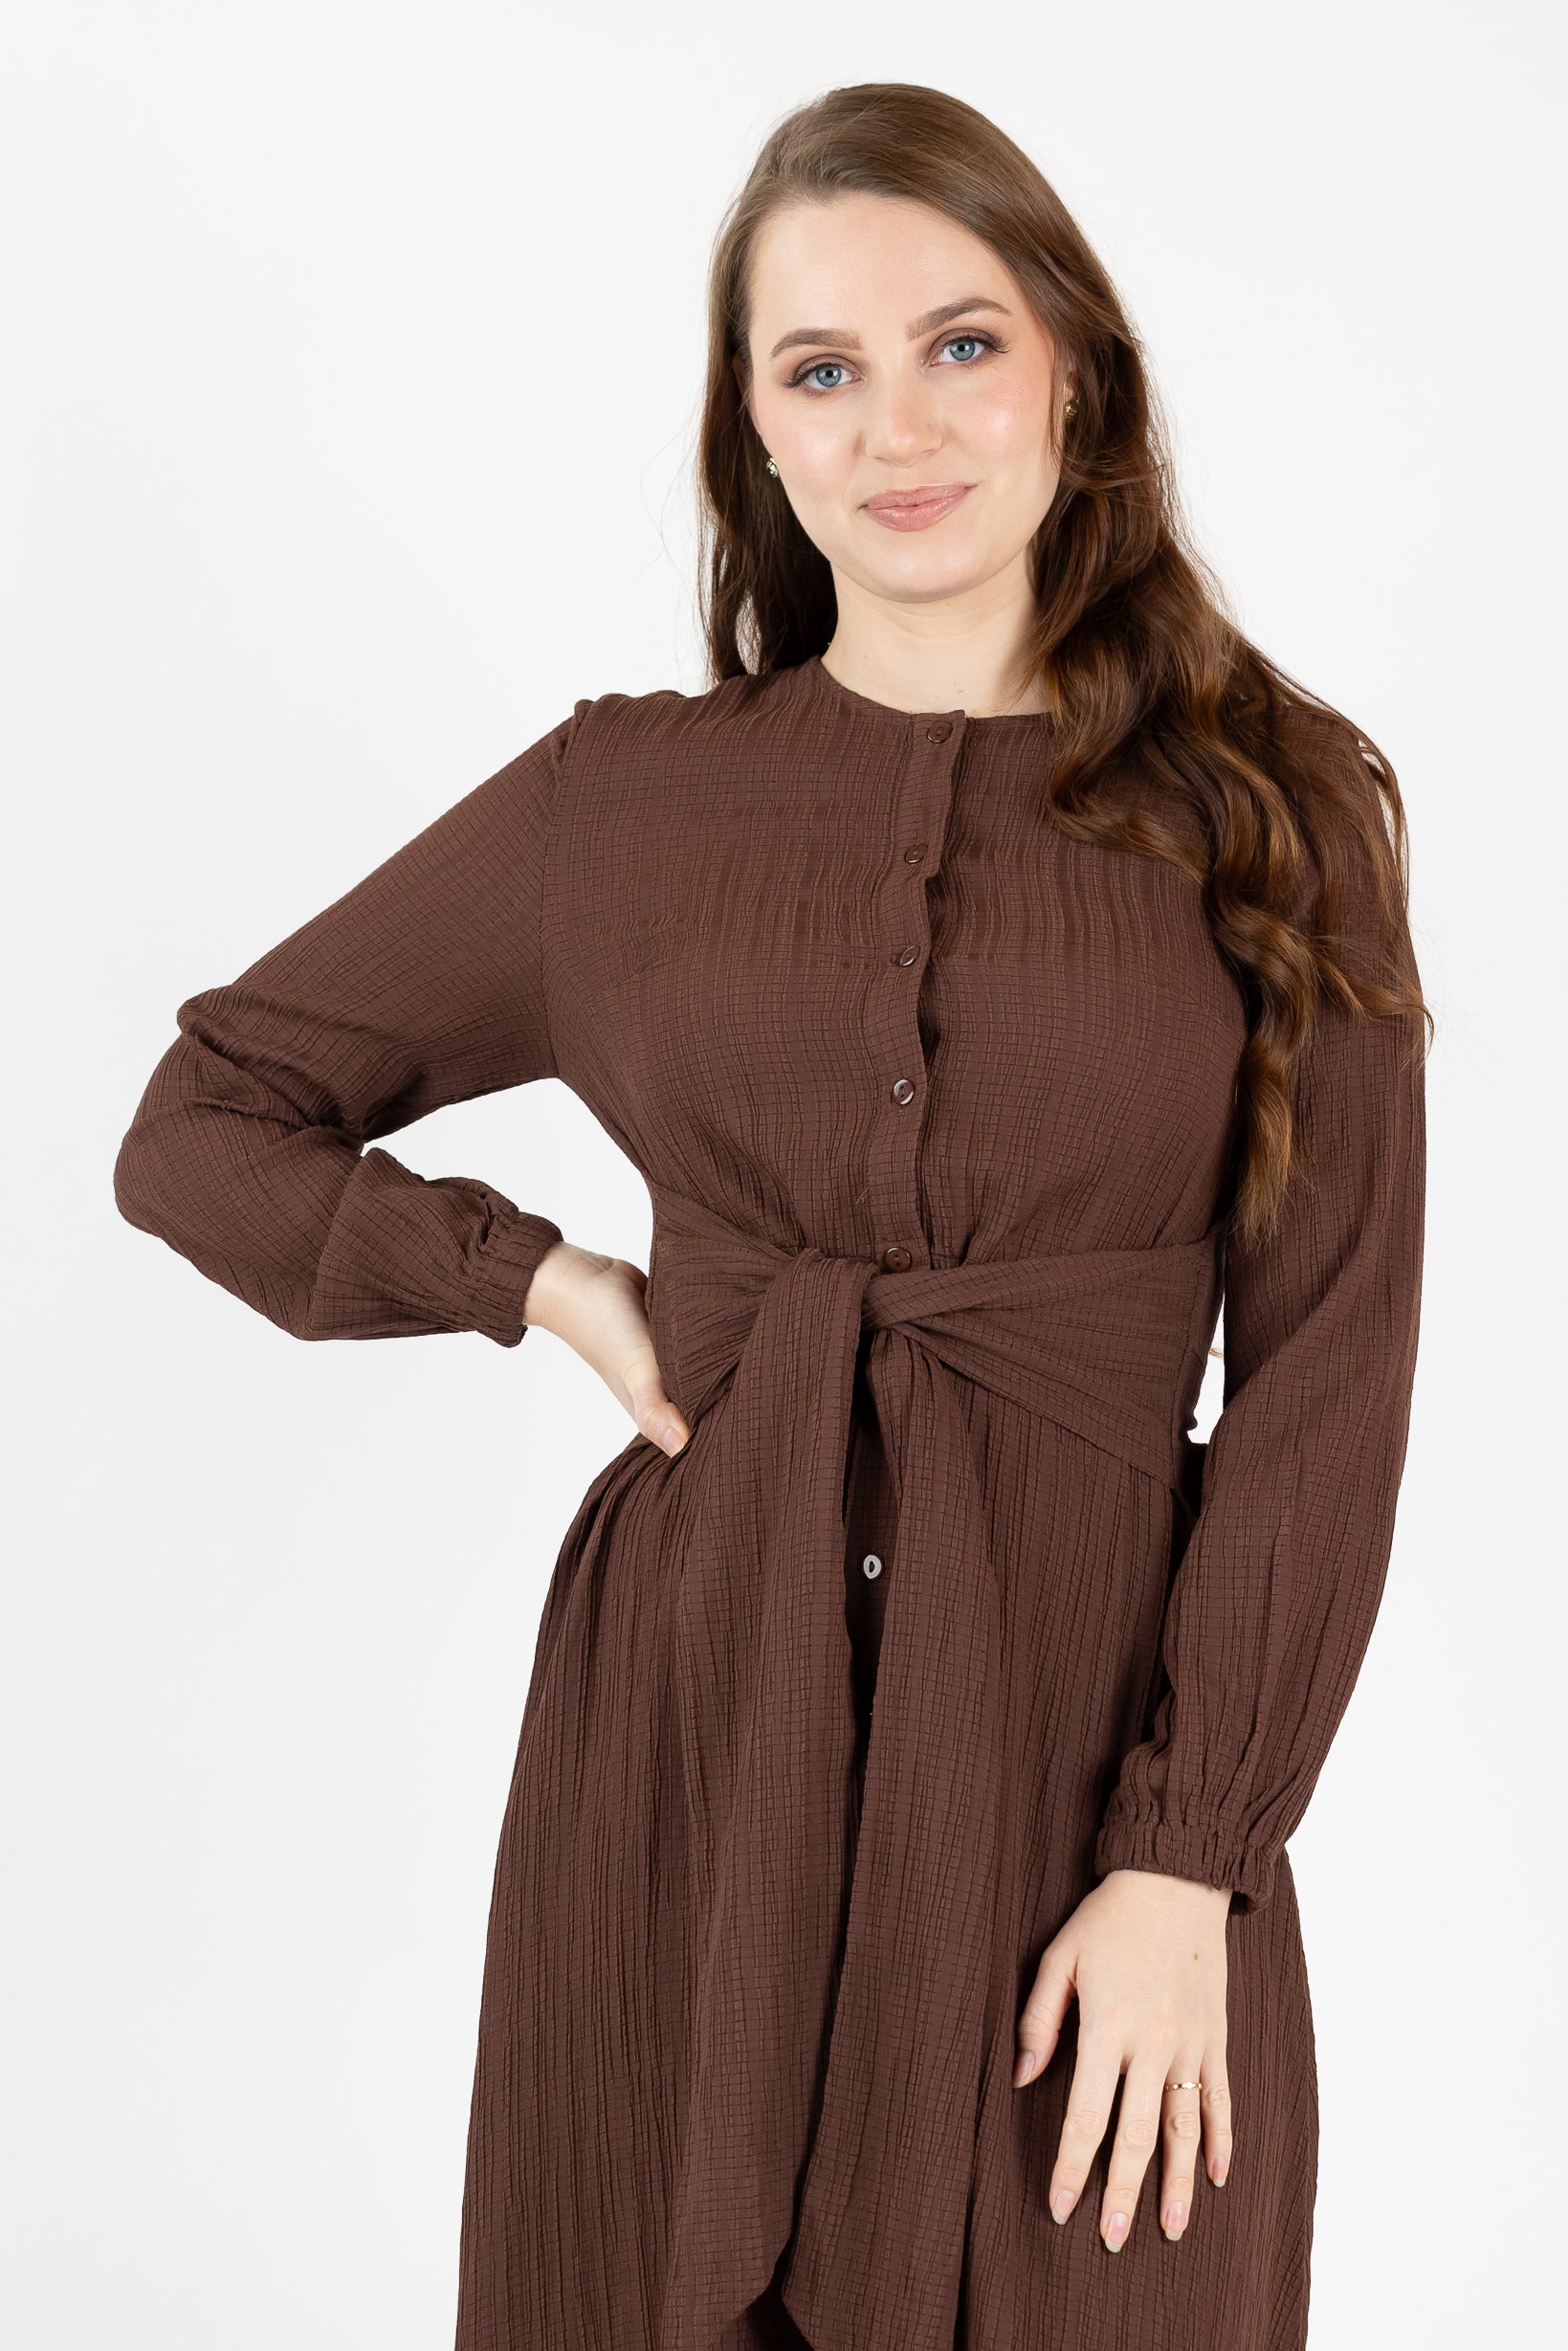 60374-1-Brown-dress